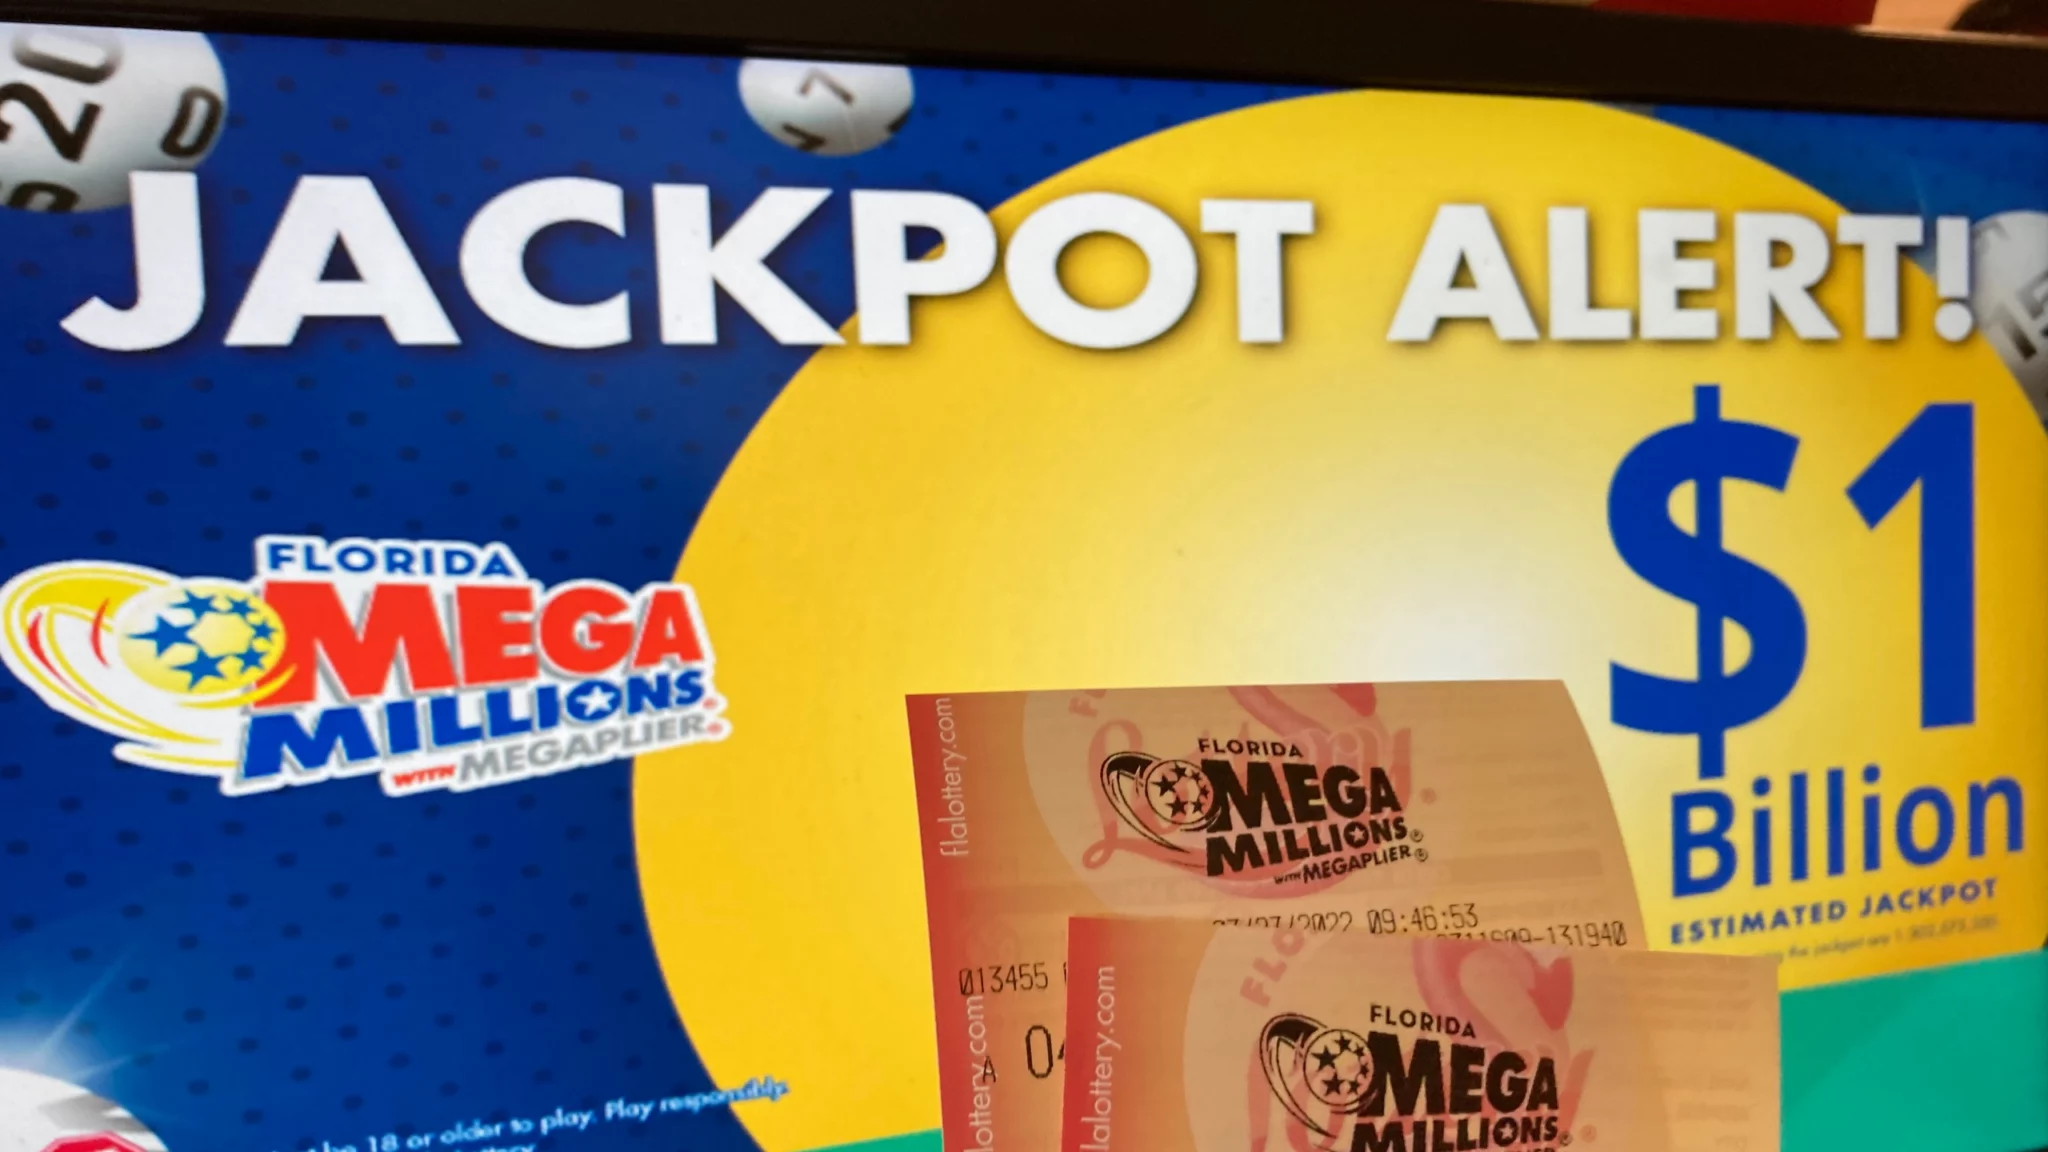 Jackpot in the Mega Millions lottery